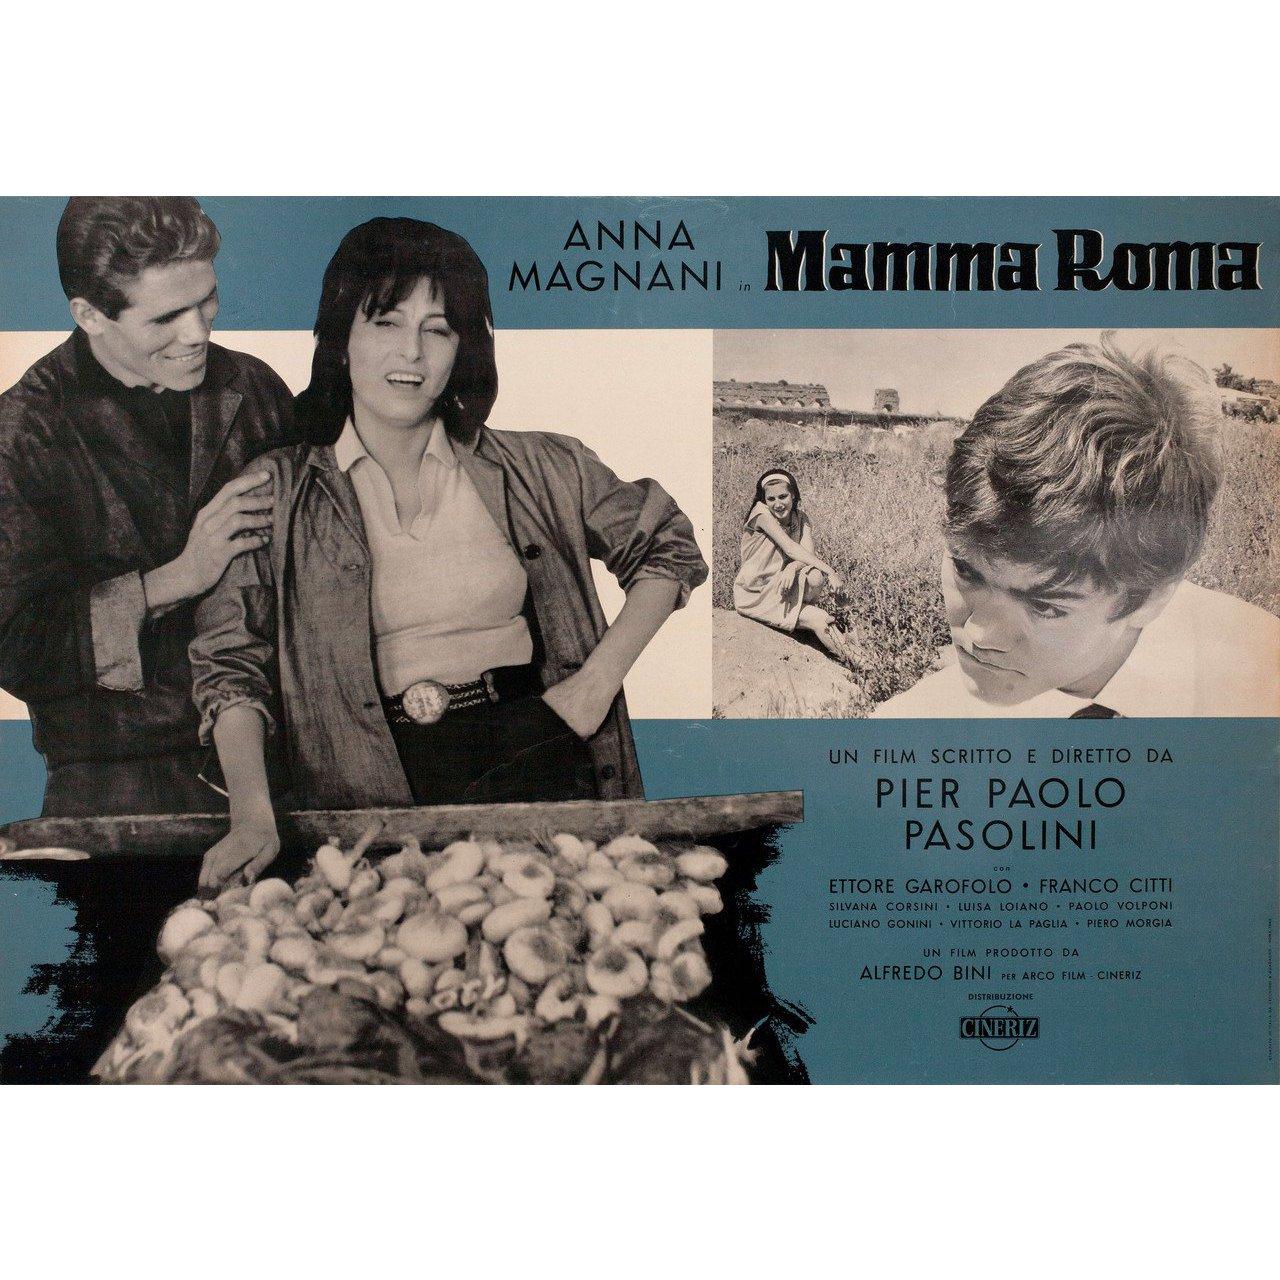 Original 1962 Italian fotobusta poster for the film 'Mamma Roma' directed by Pier Paolo Pasolini with Anna Magnani / Ettore Garofolo / Franco Citti / Silvana Corsini. Fine condition, folded. Many original posters were issued folded or were